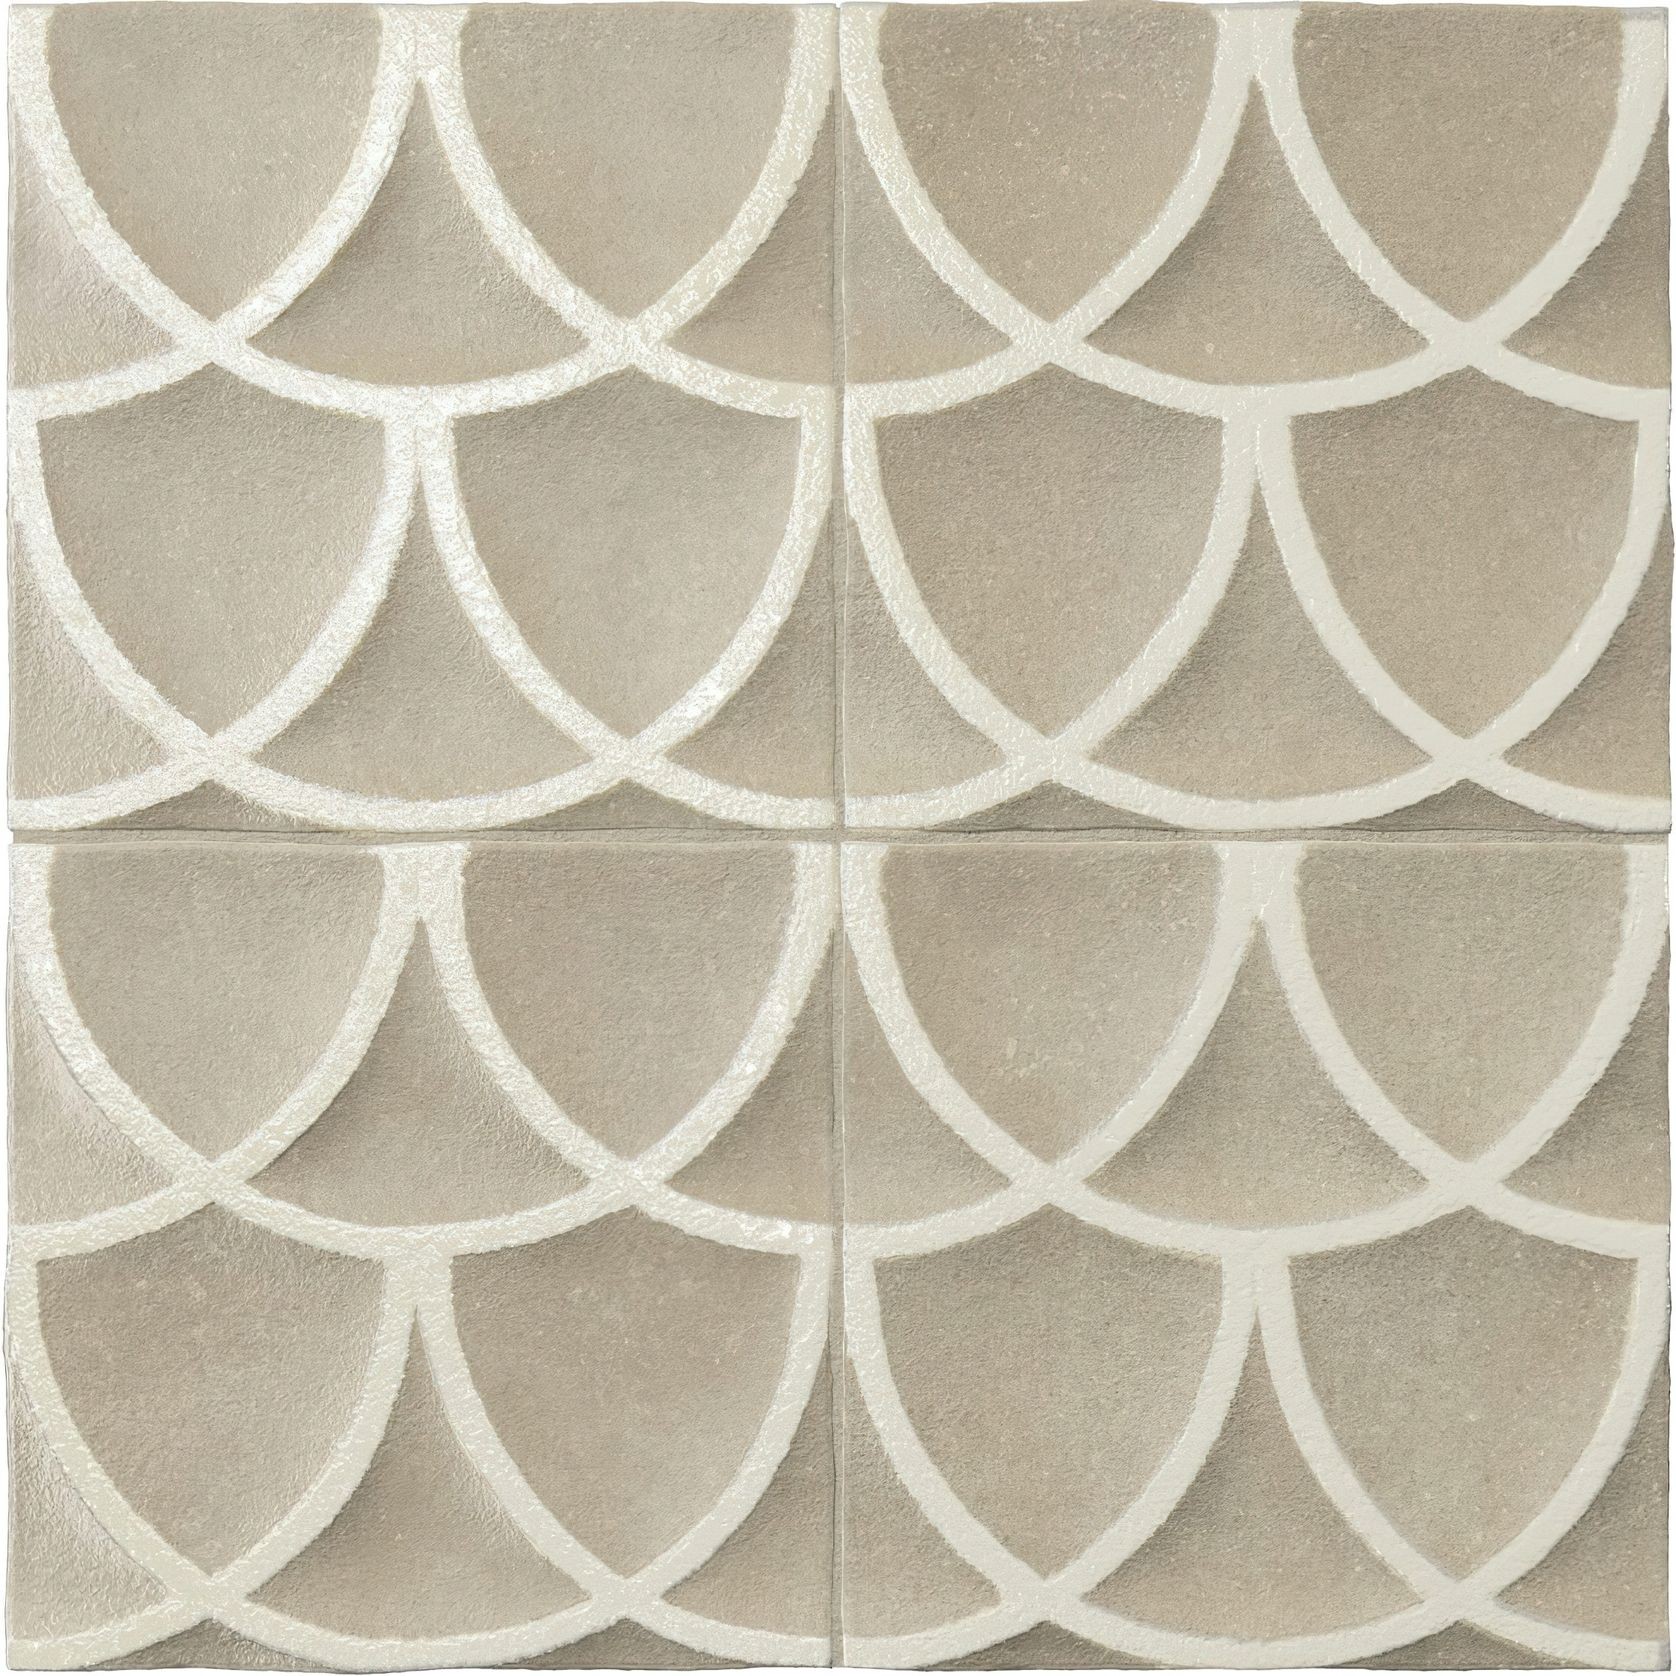 Terracreta Series Porcelain Tiles gallery detail image